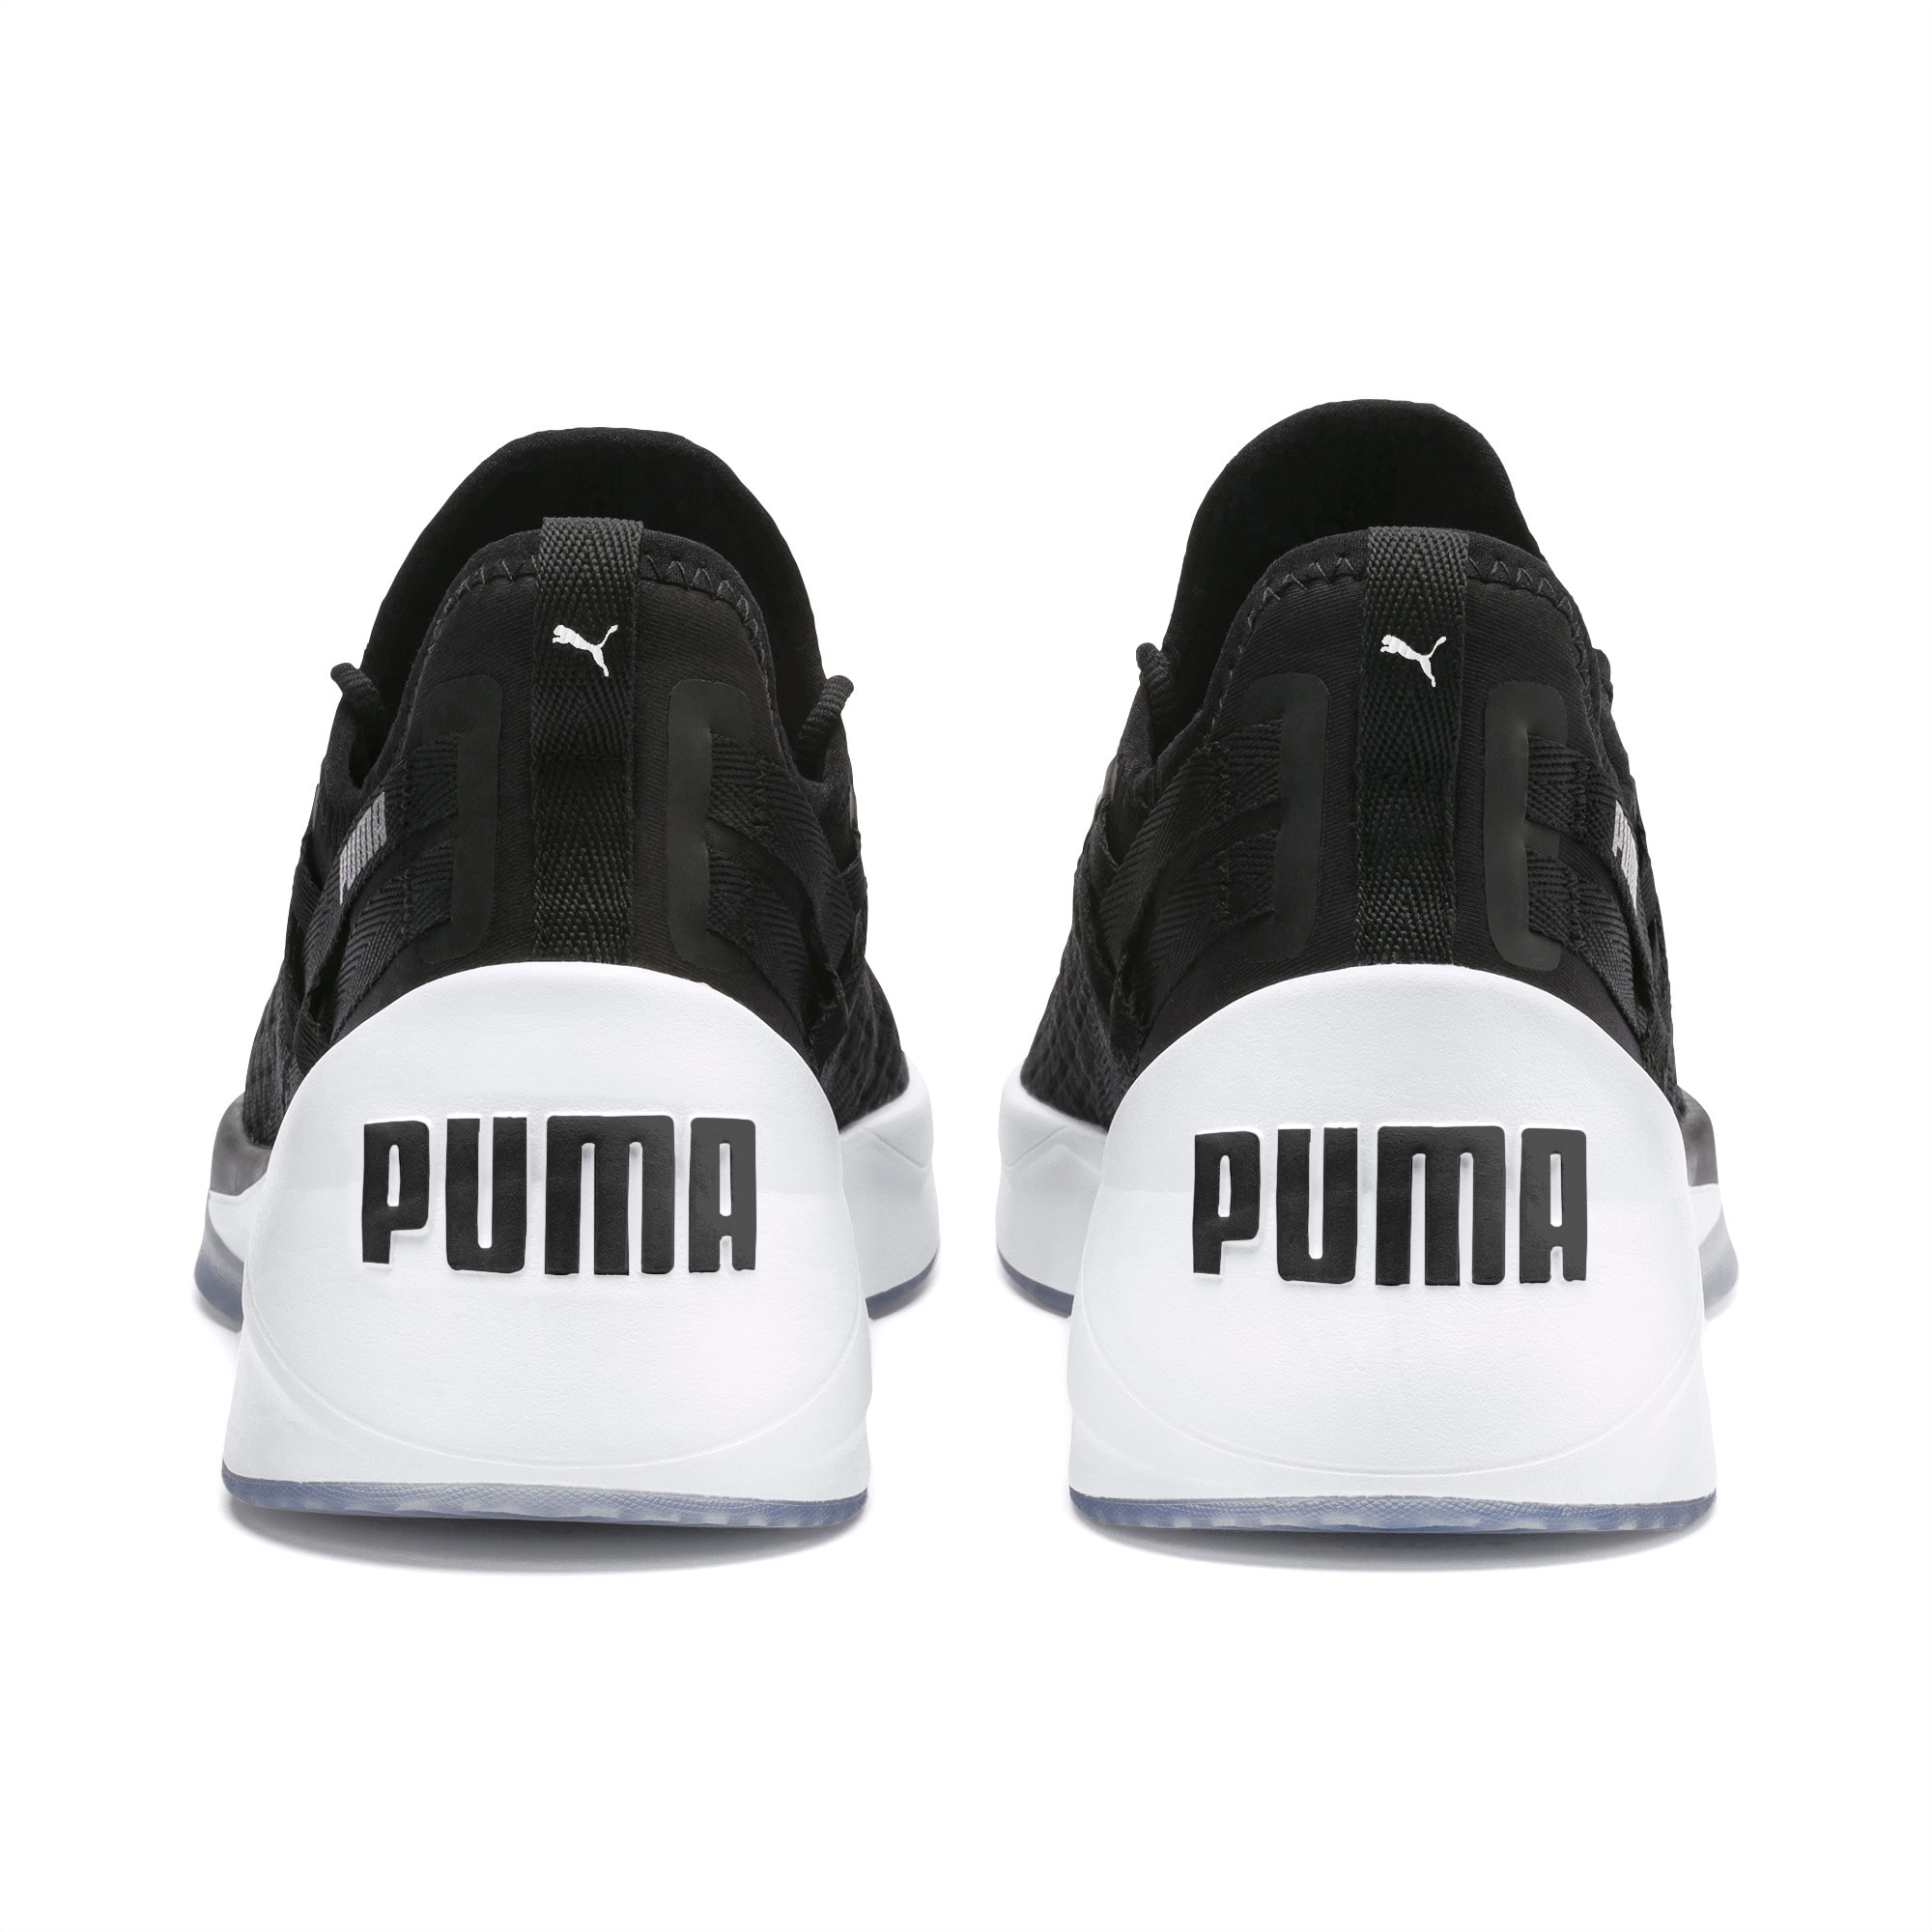 puma training jaab xt sneakers in black